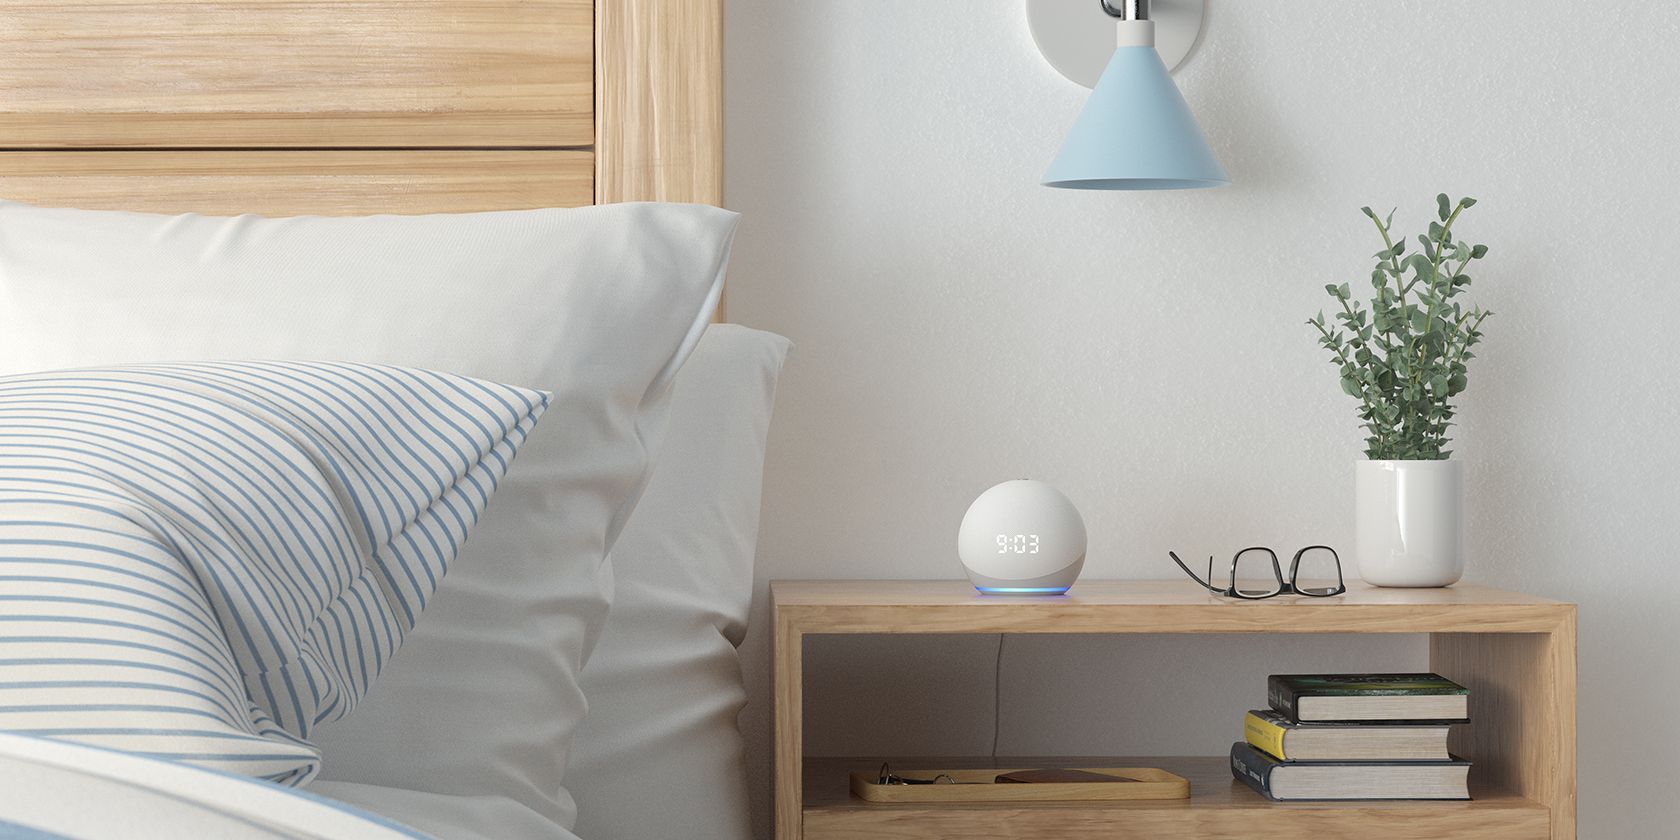 Echo Dot with clock Glacier White Bedroom